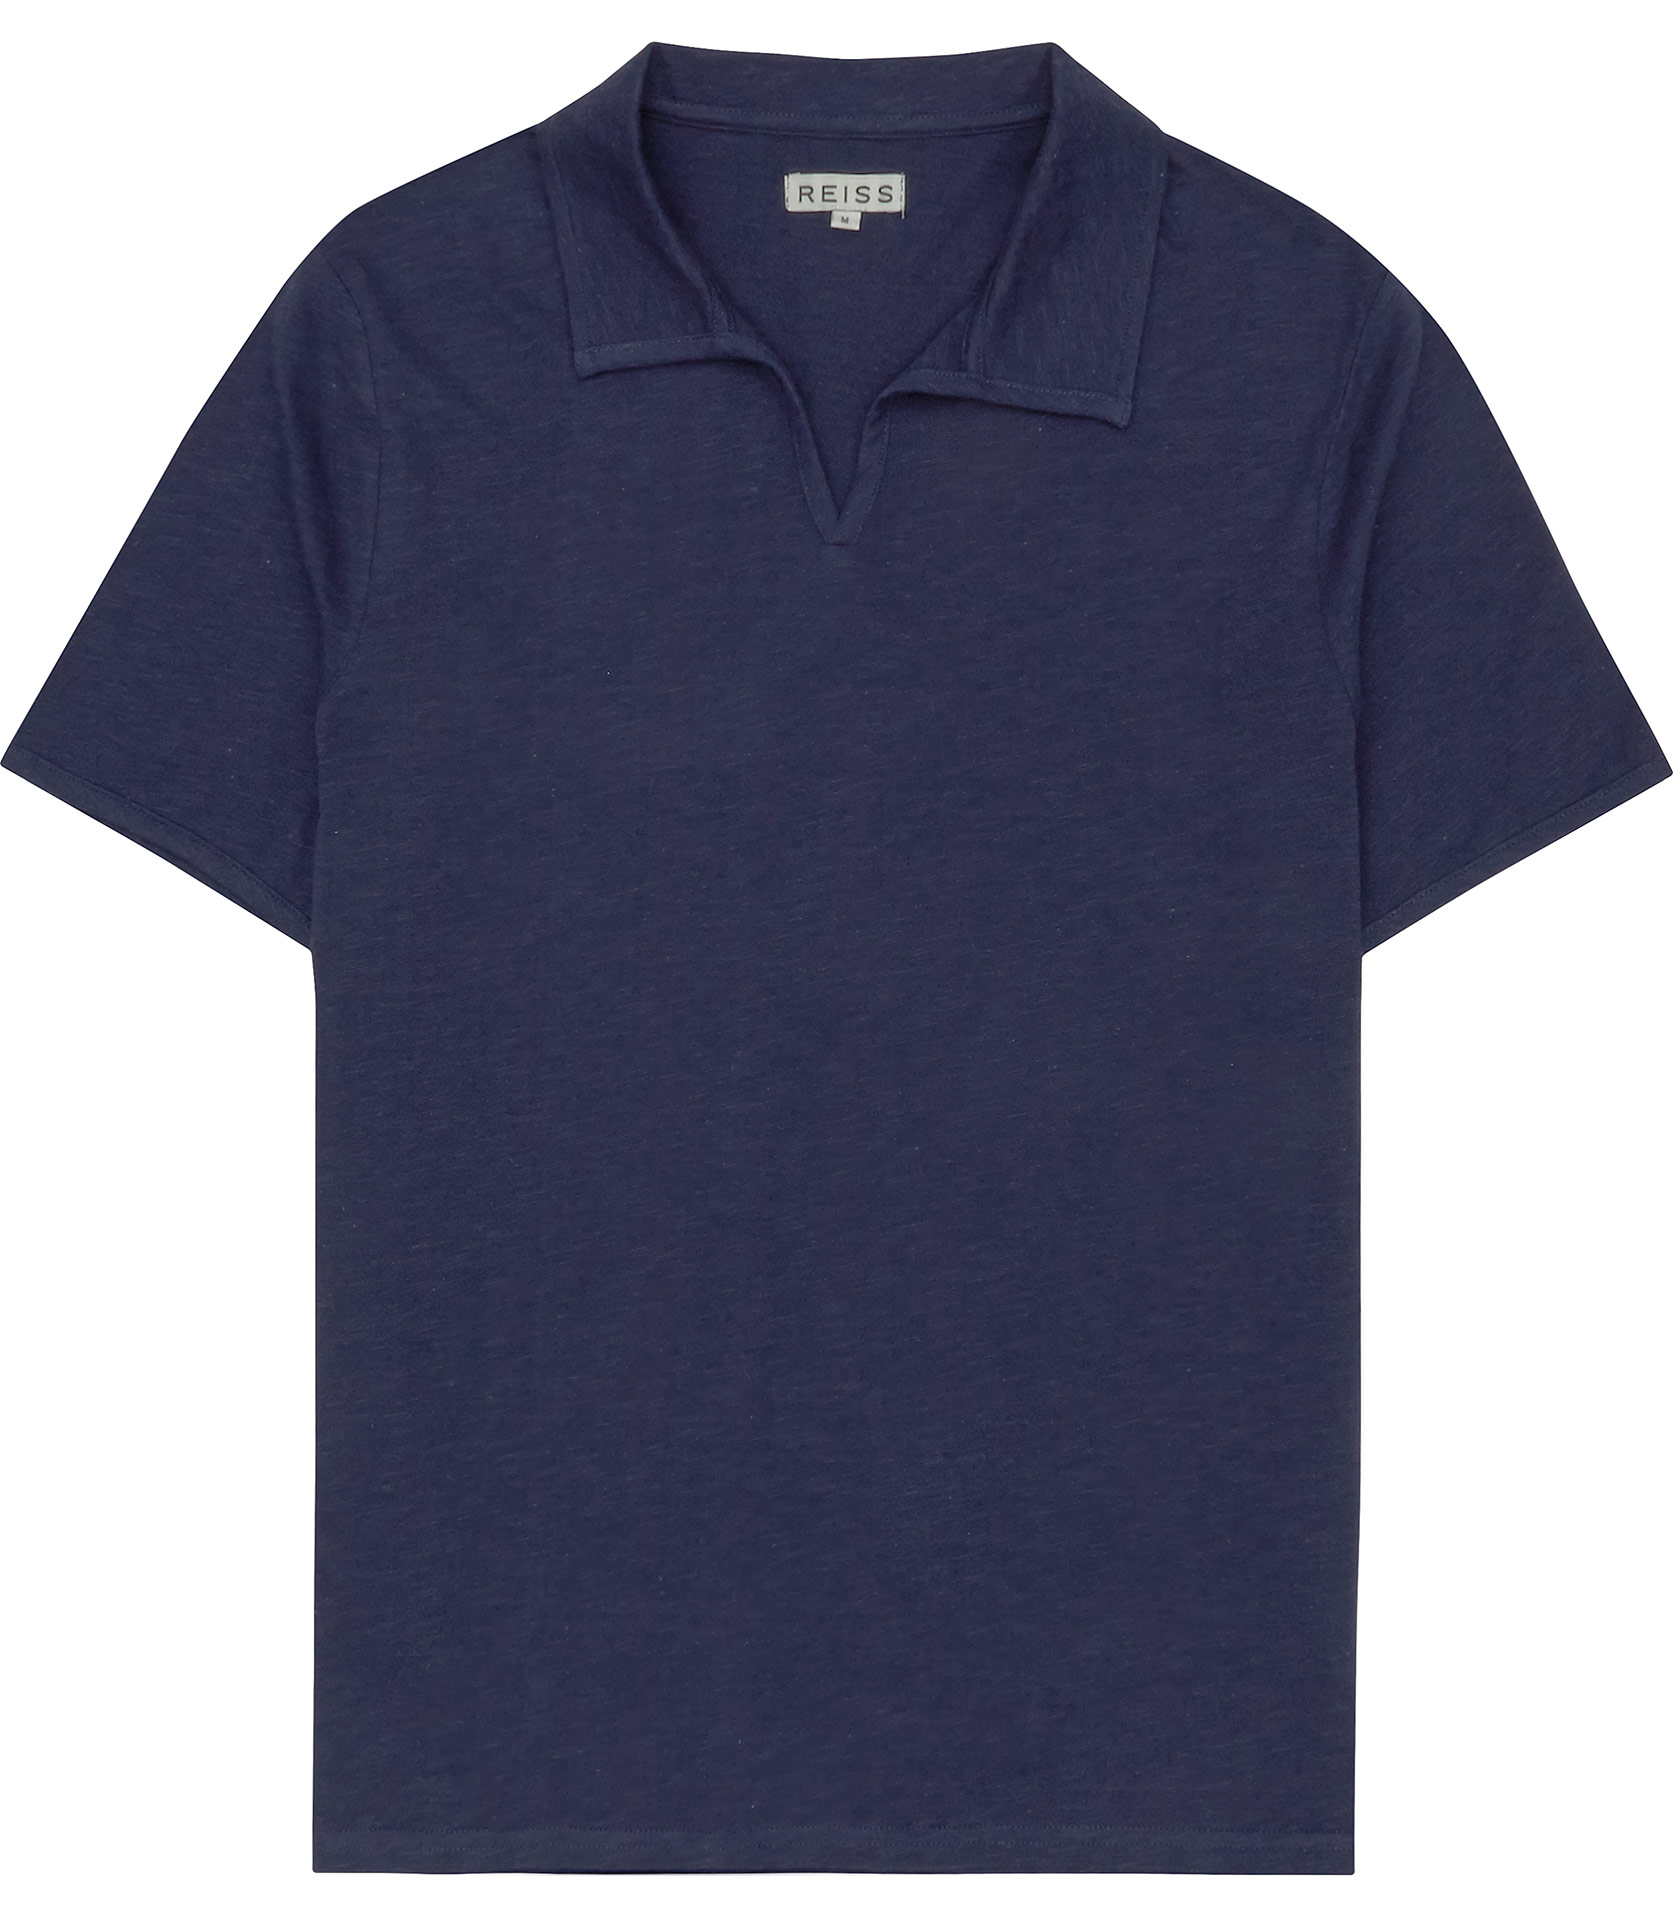 Lyst - Reiss Kingsley Open Collar Polo T-Shirt in Blue for Men